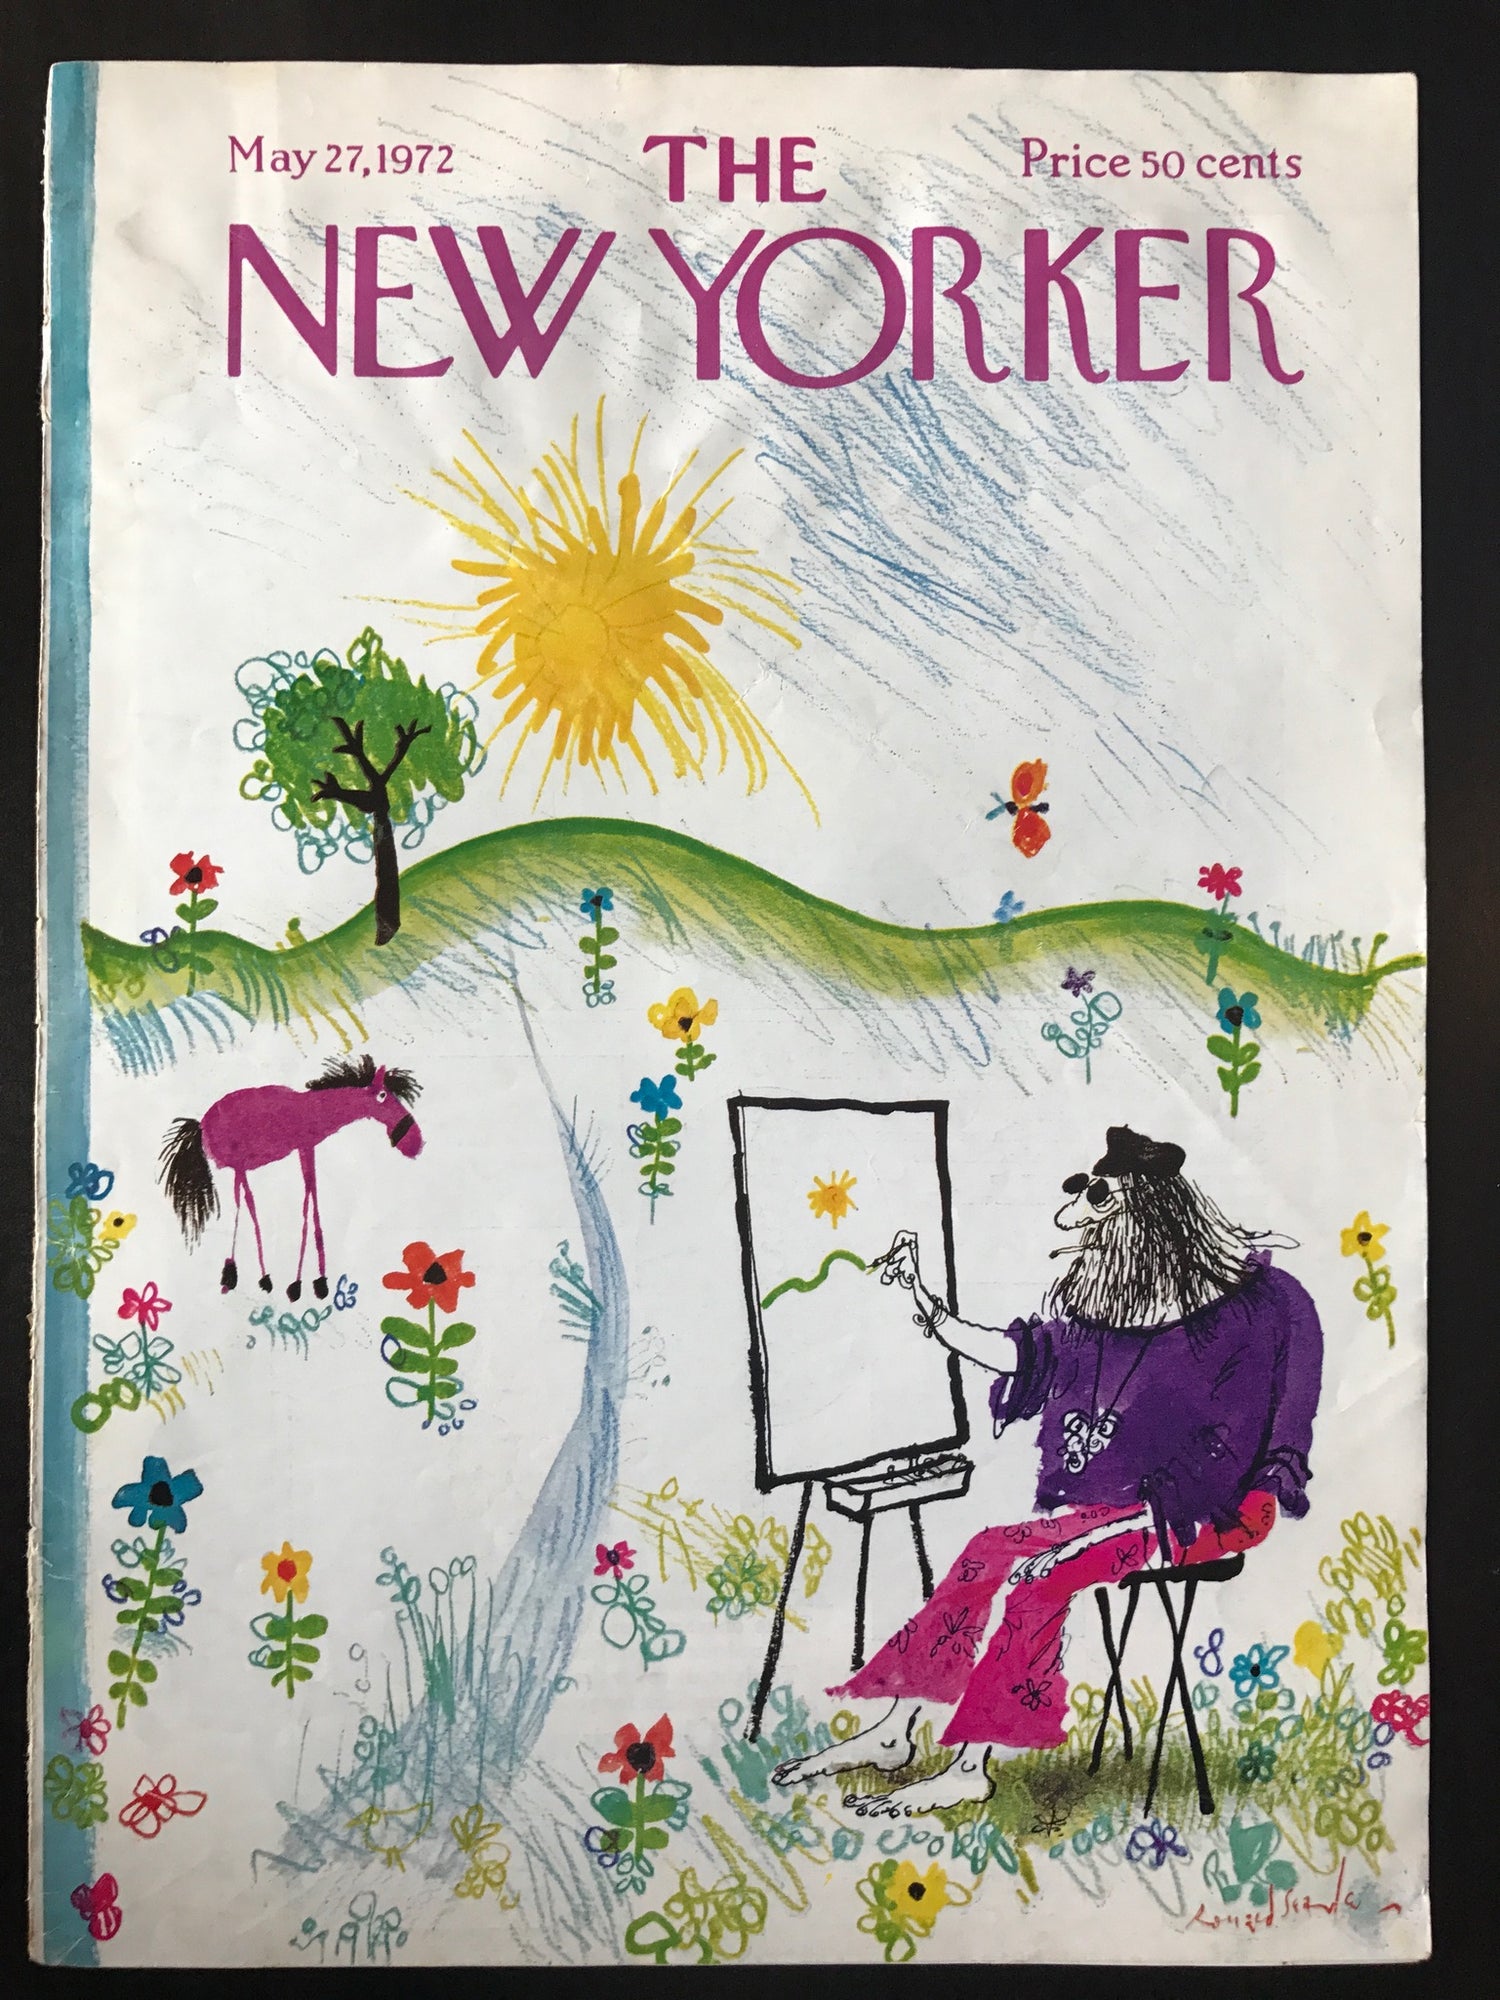 New Yorker Magazine covers